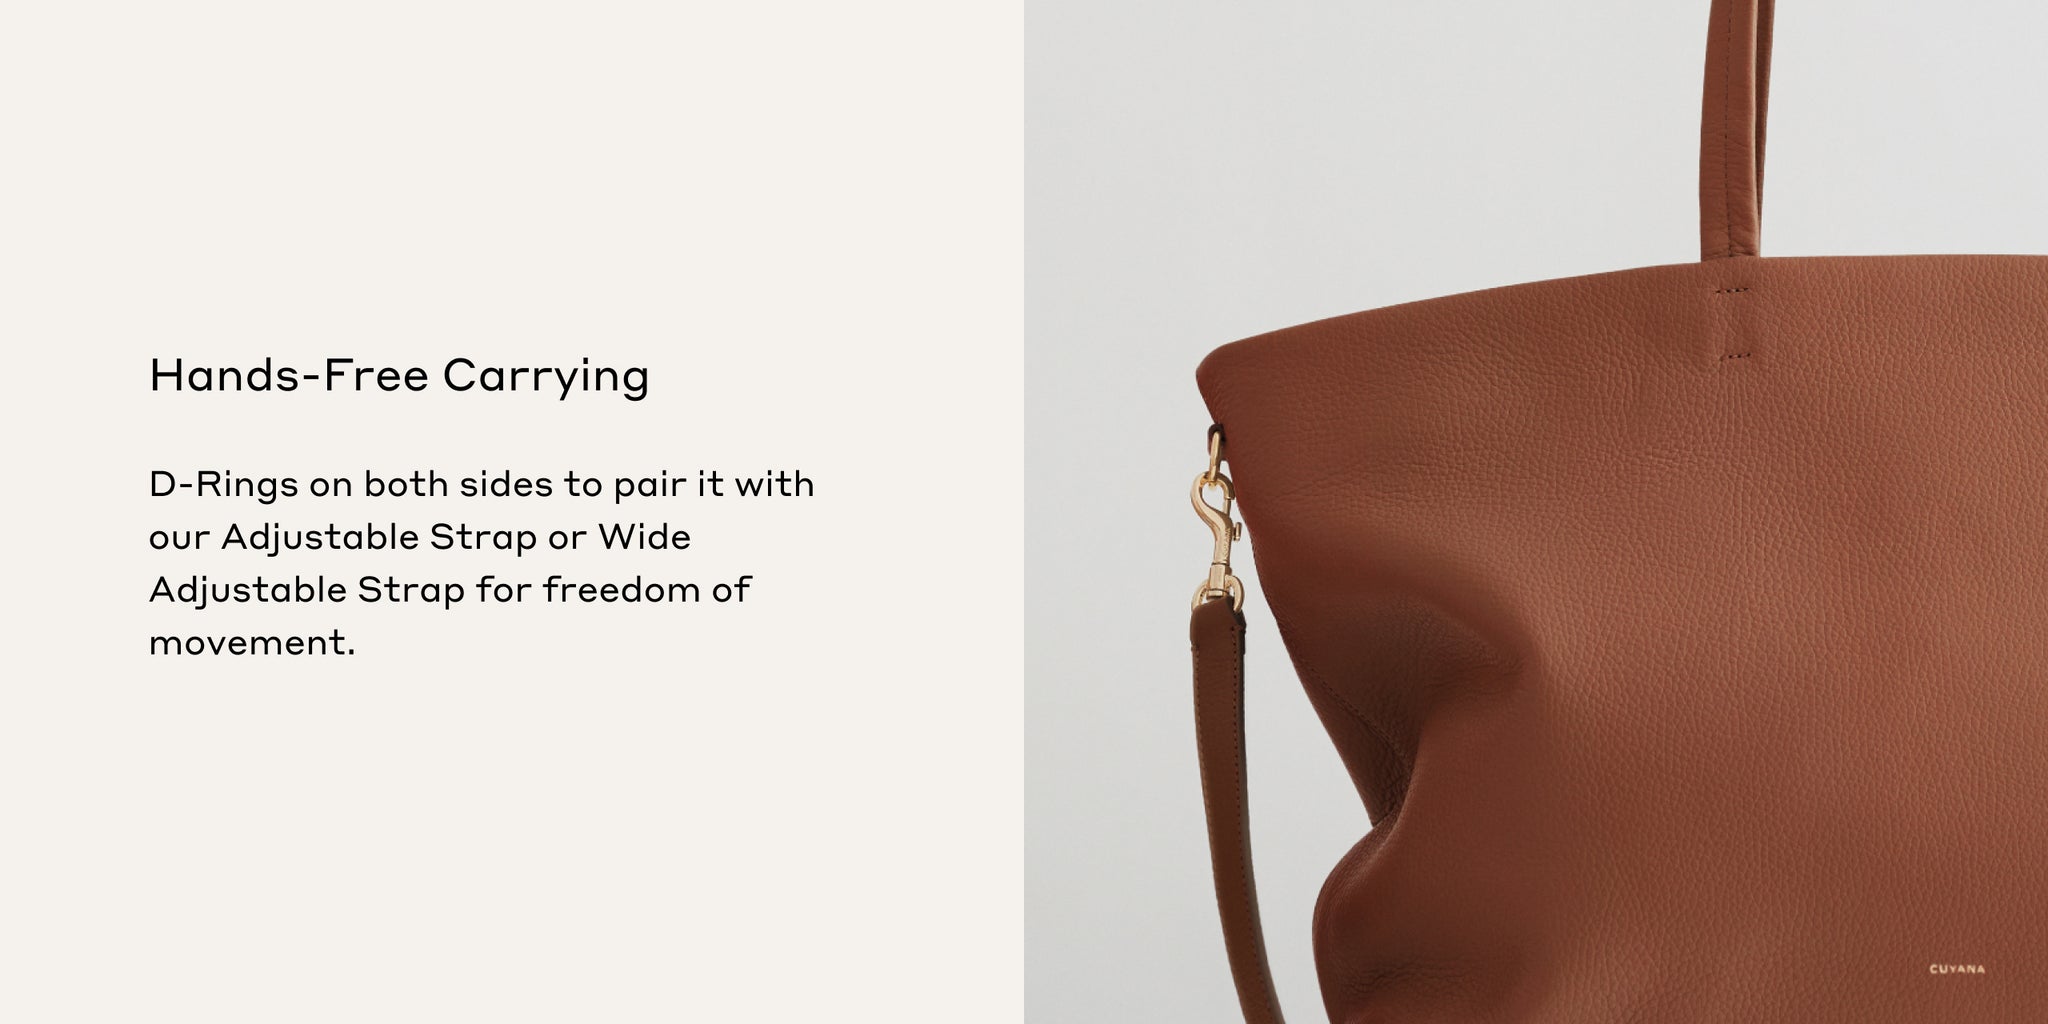 Beige Genuine Leather Tote Bag Top Handle Zip Tote With Inner